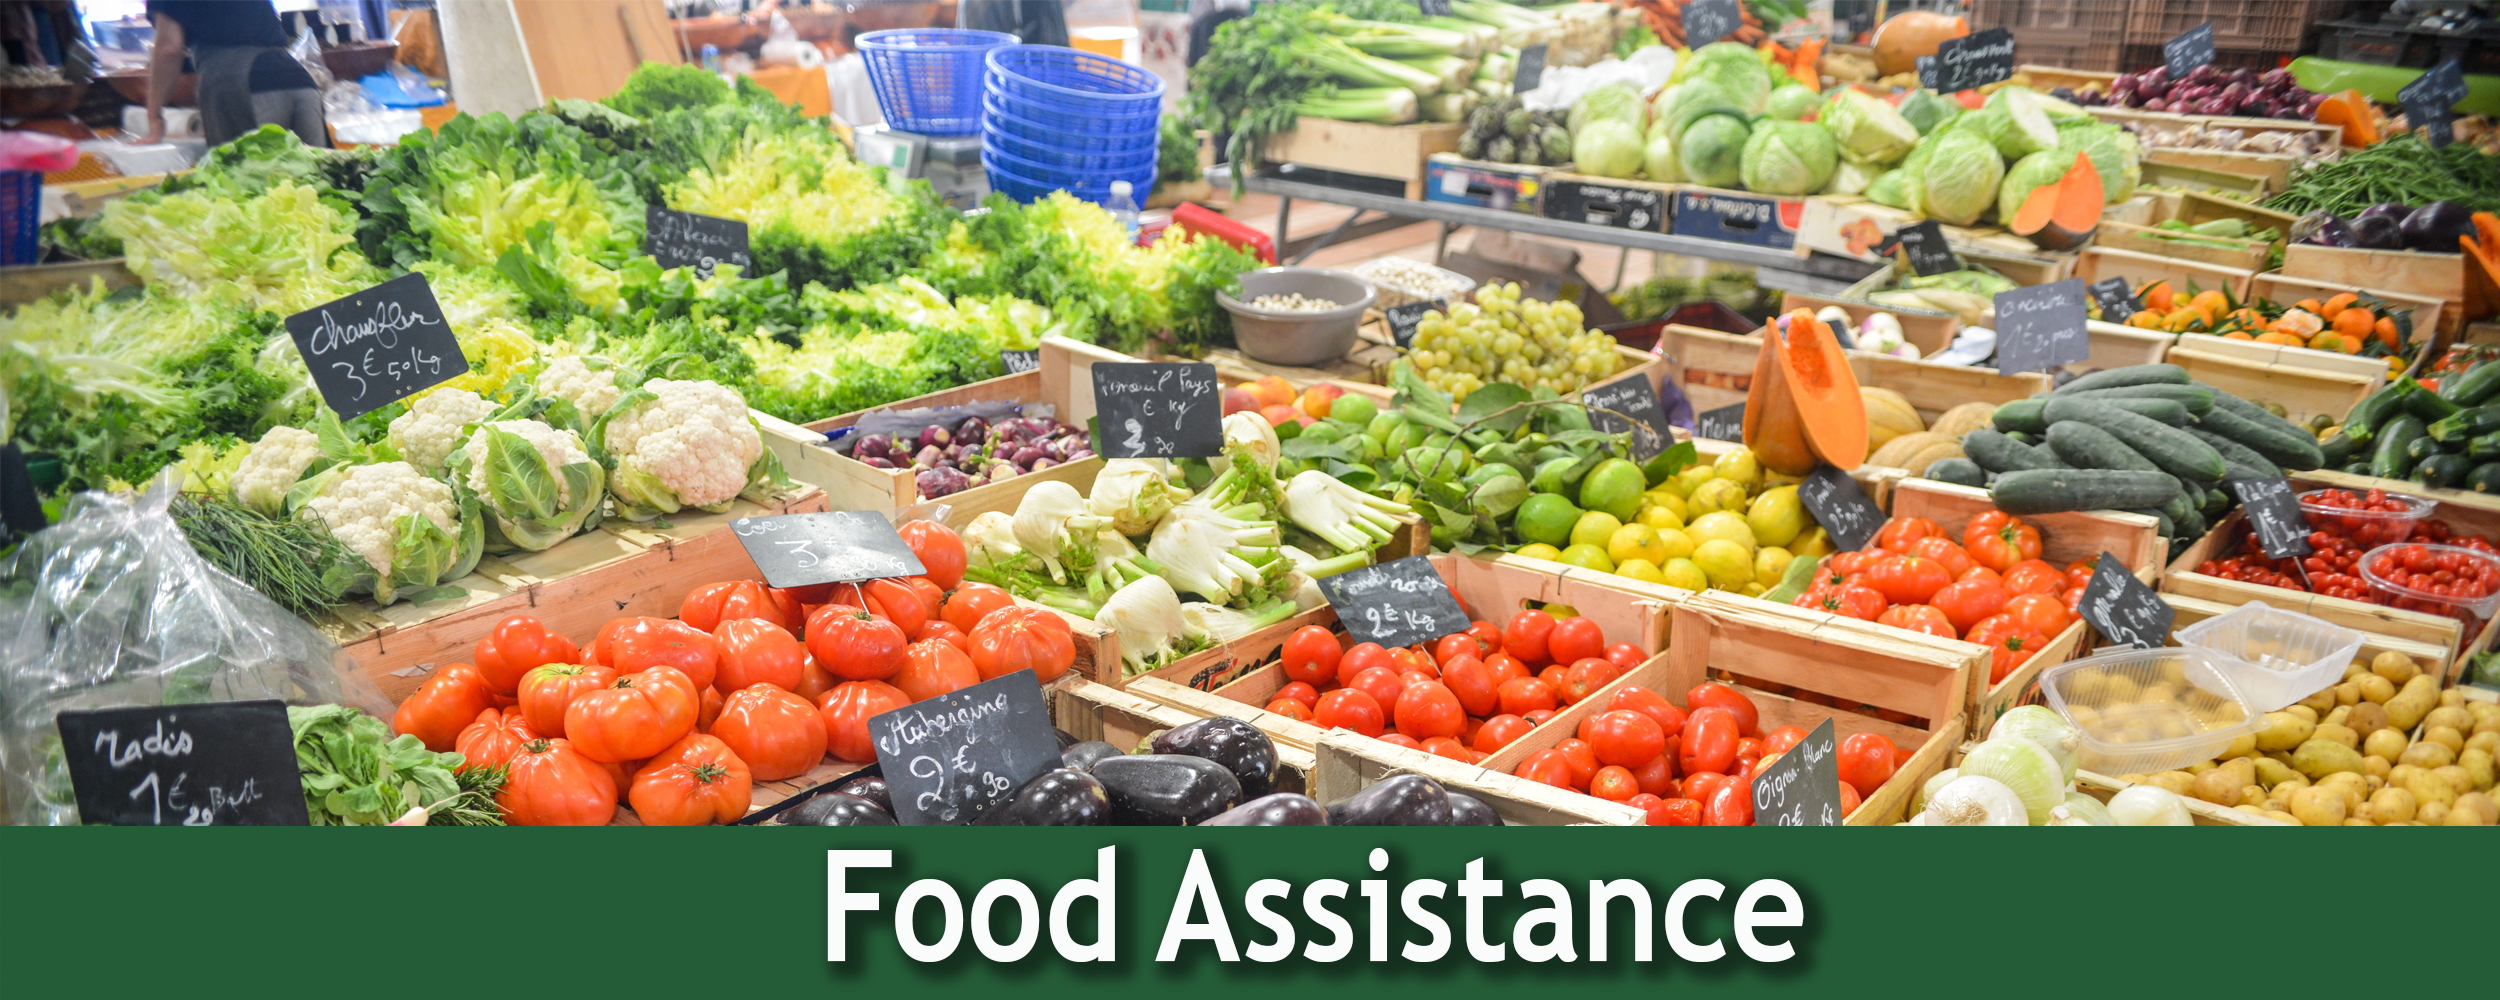 colorado-food-assistance-program-raises-nutrition-standards-i-70